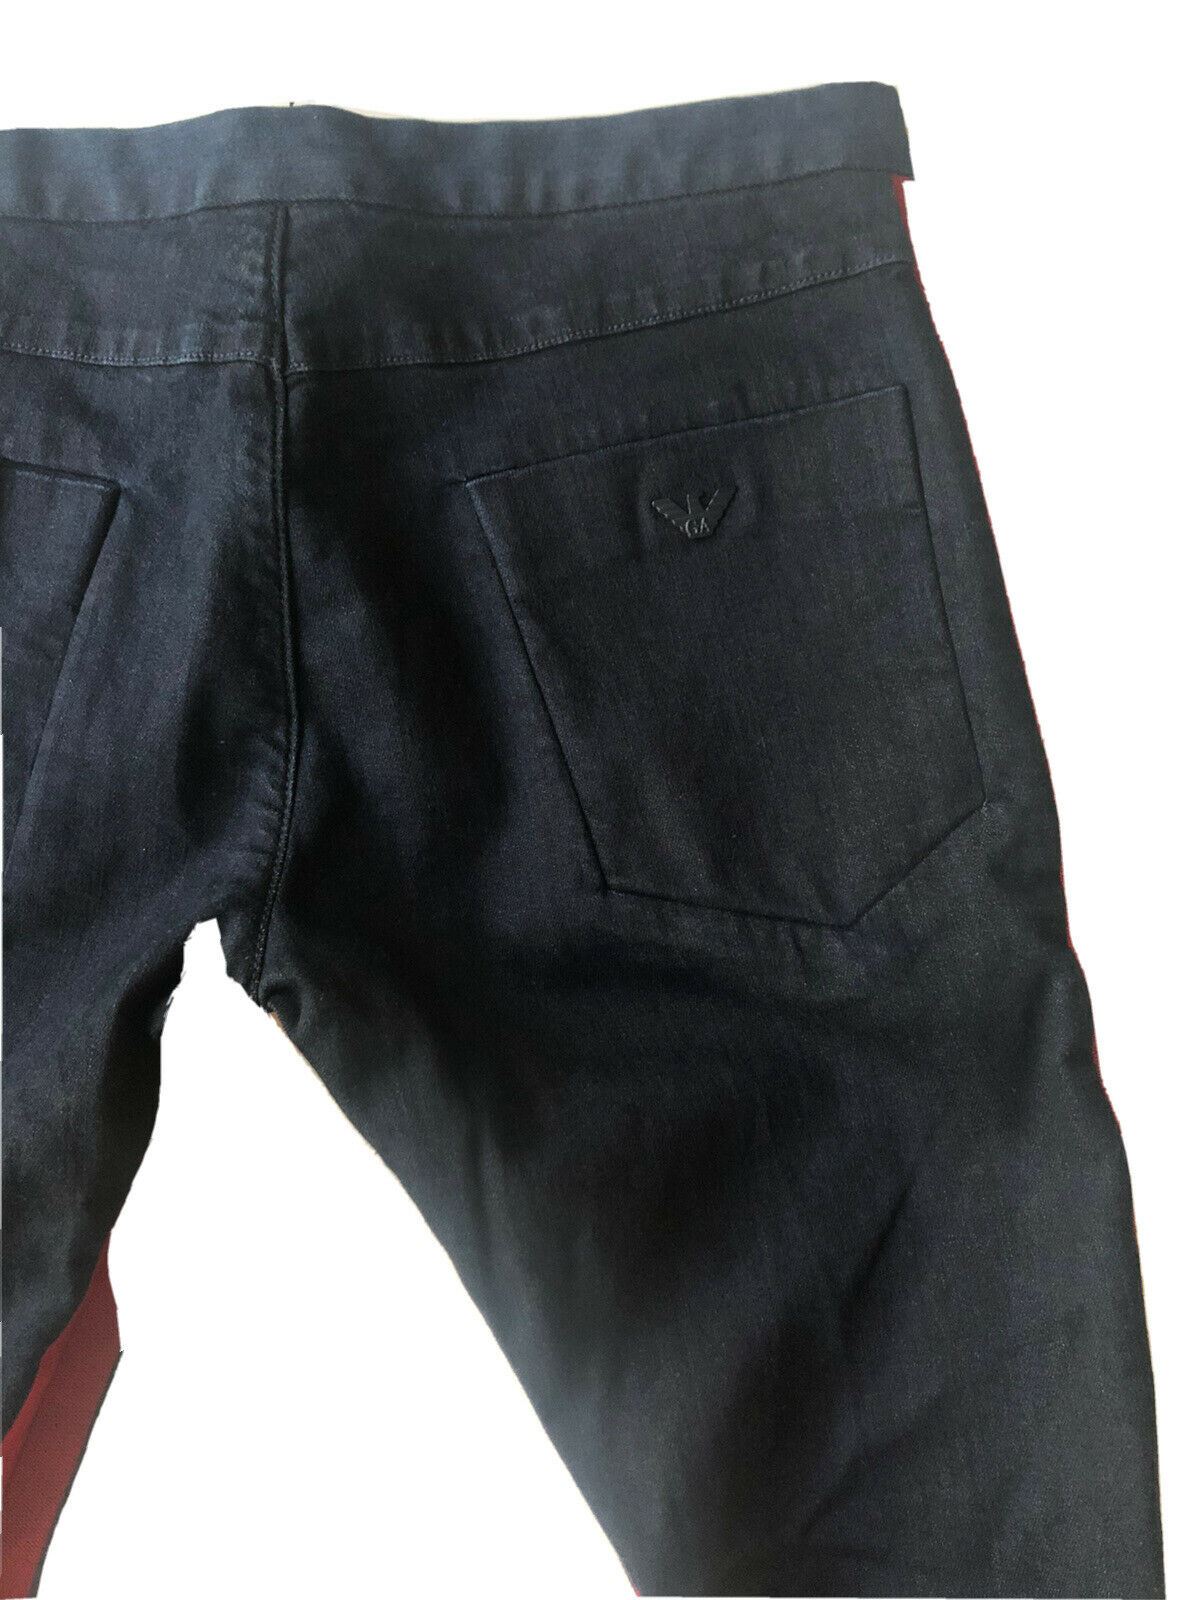 armani jeans 34 32